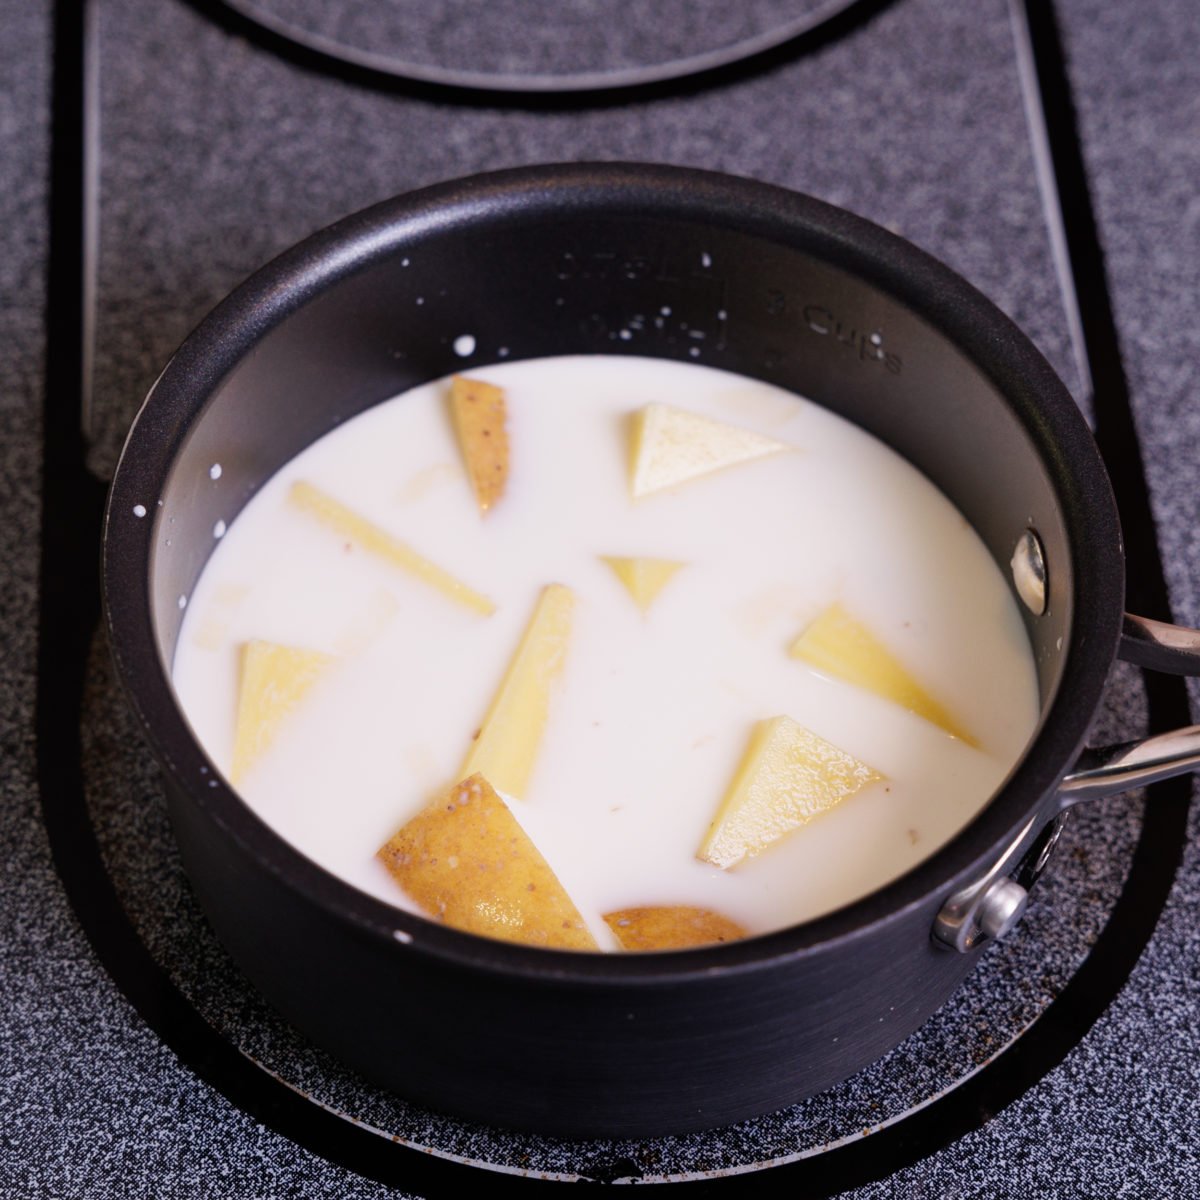 potatoes in milk inside a small saucepan.